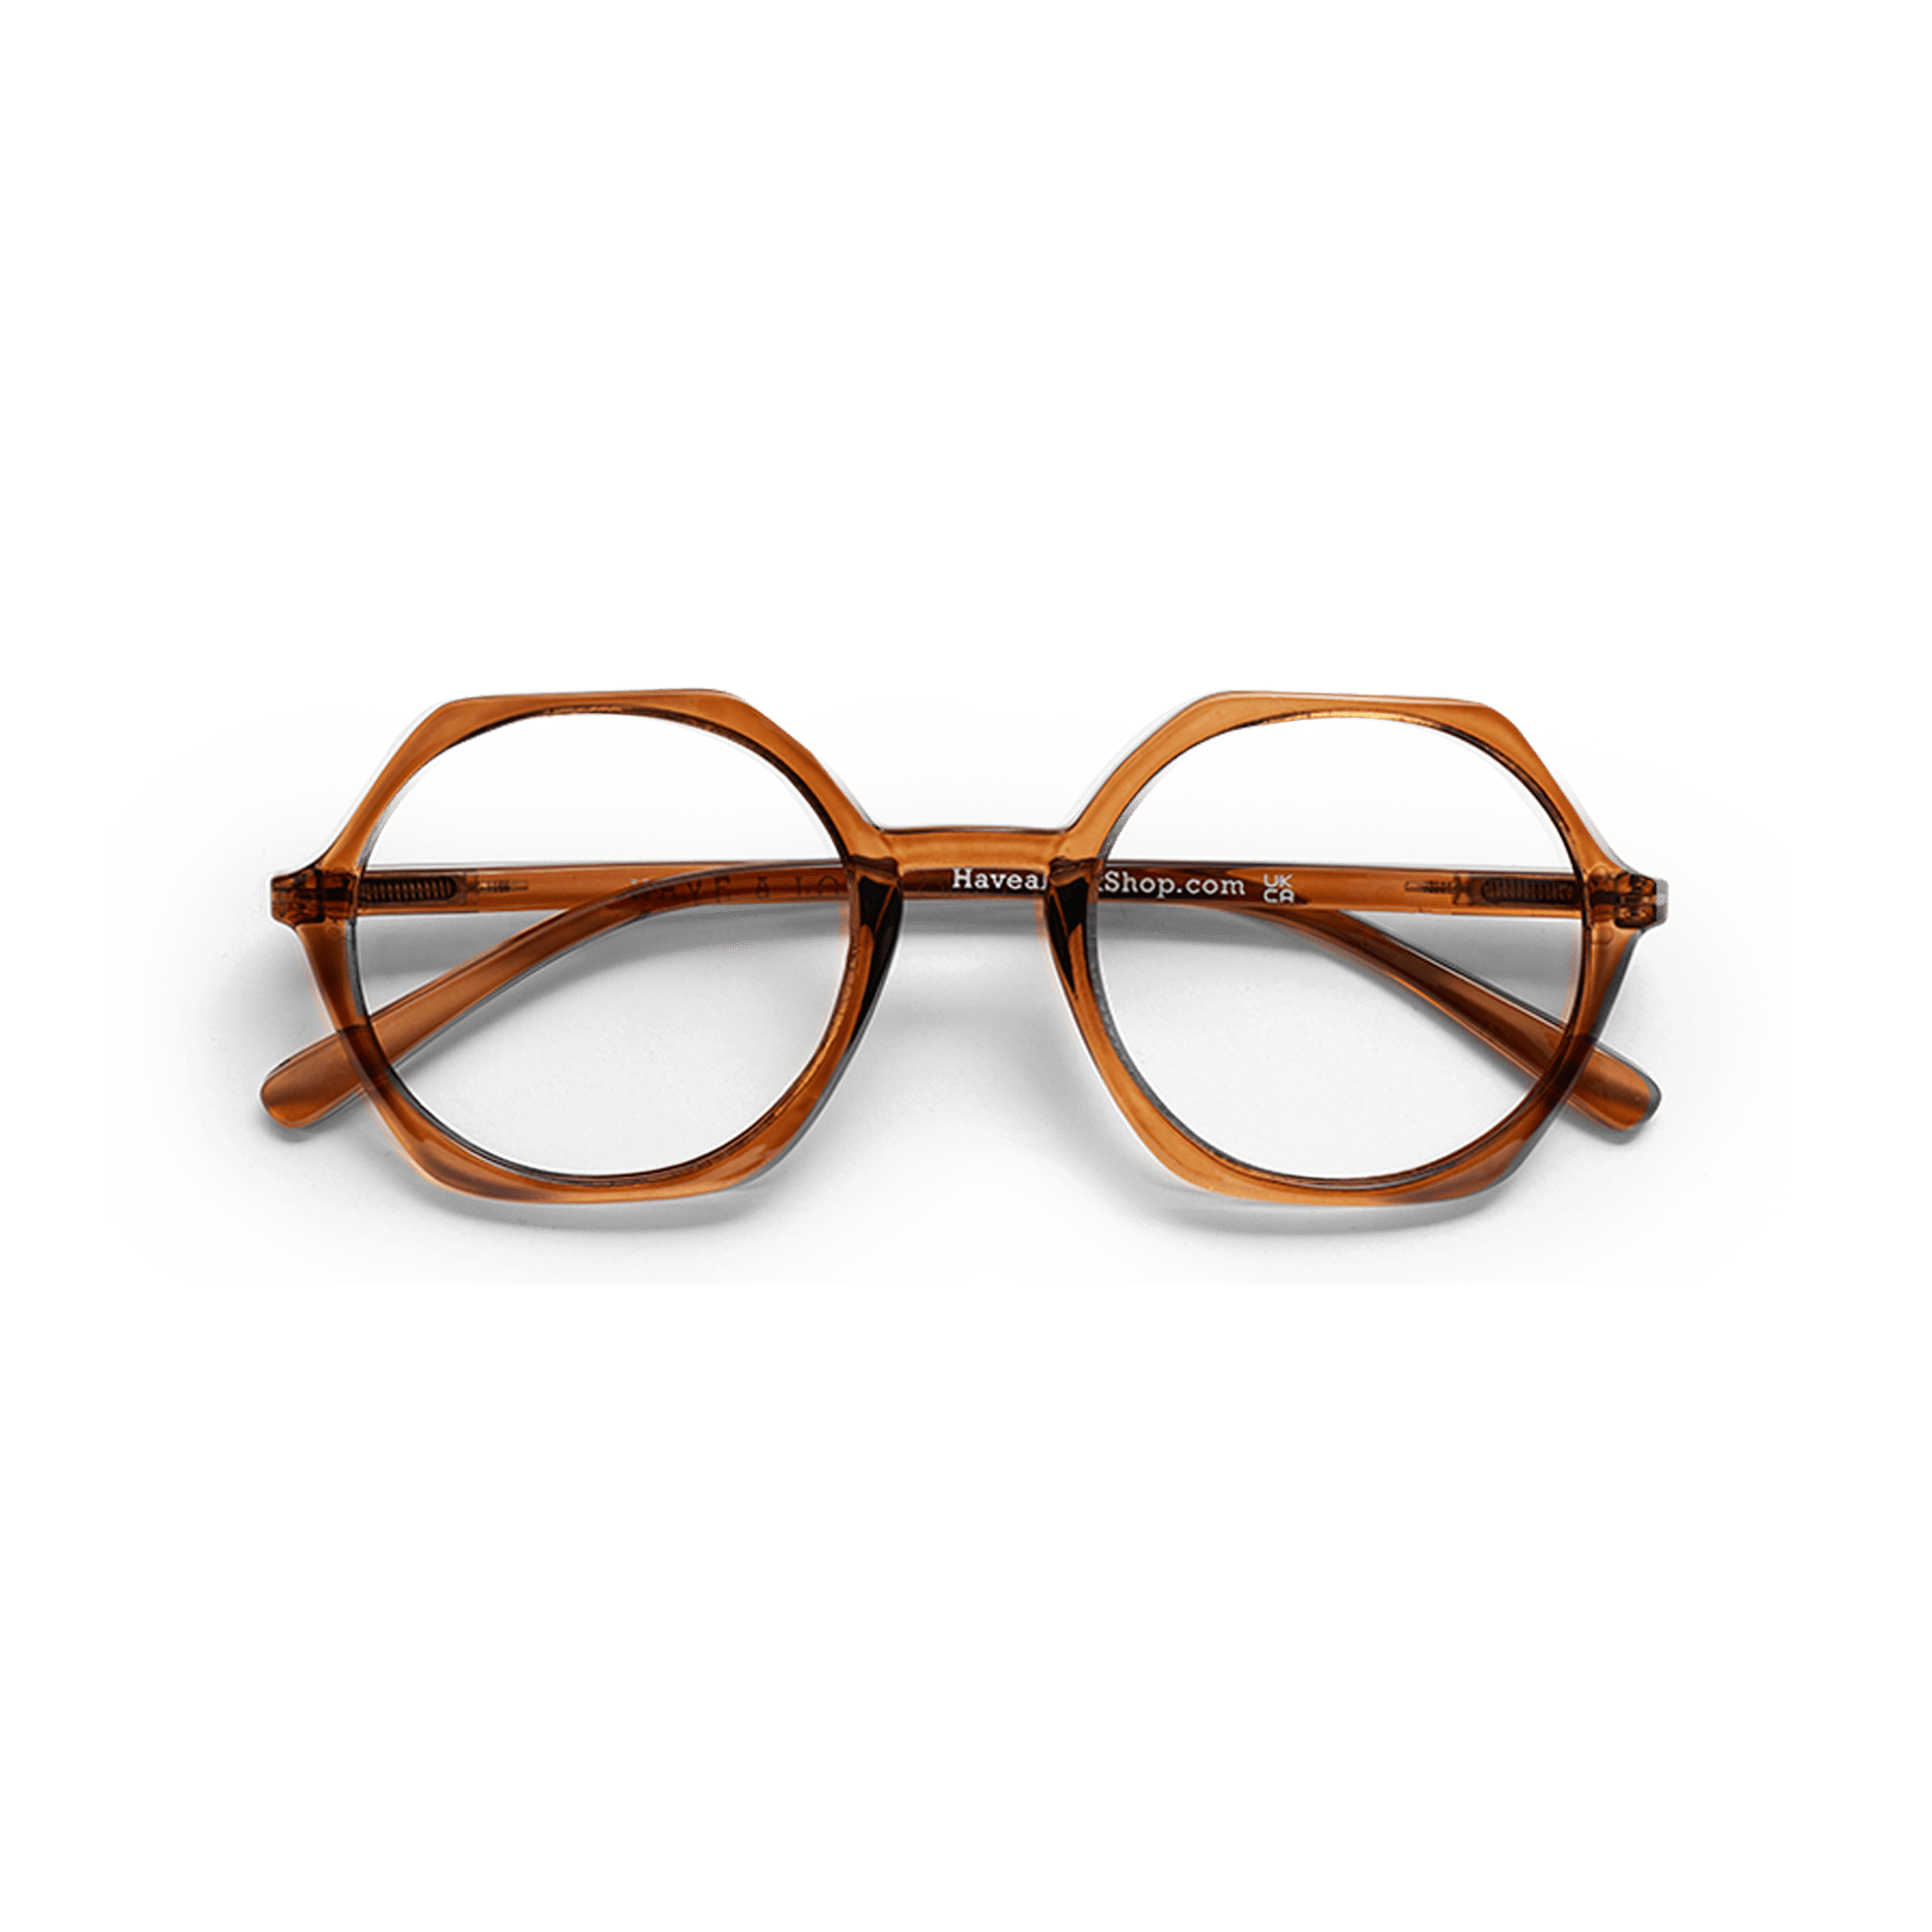 Minusbriller Edgy - brown